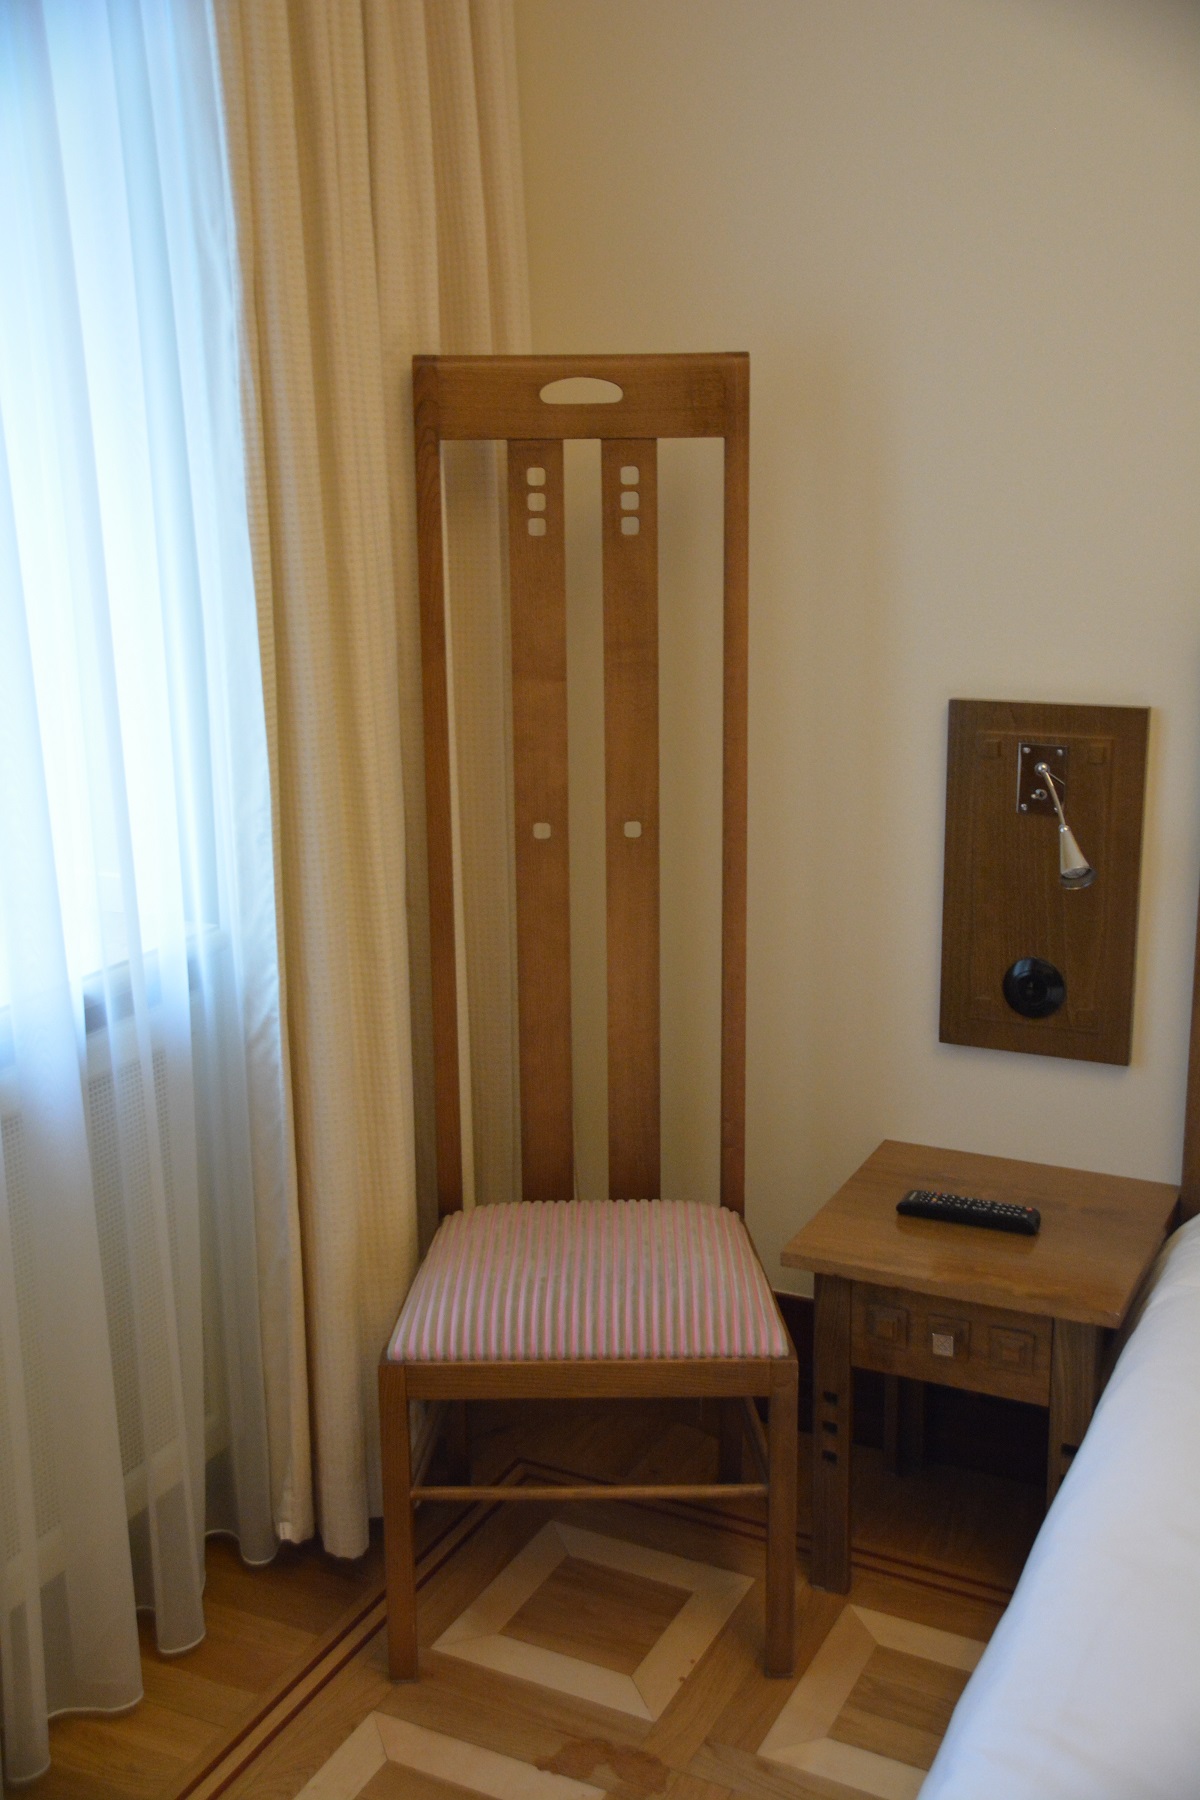 Period furniture at the Rialto Hotel Warsaw.